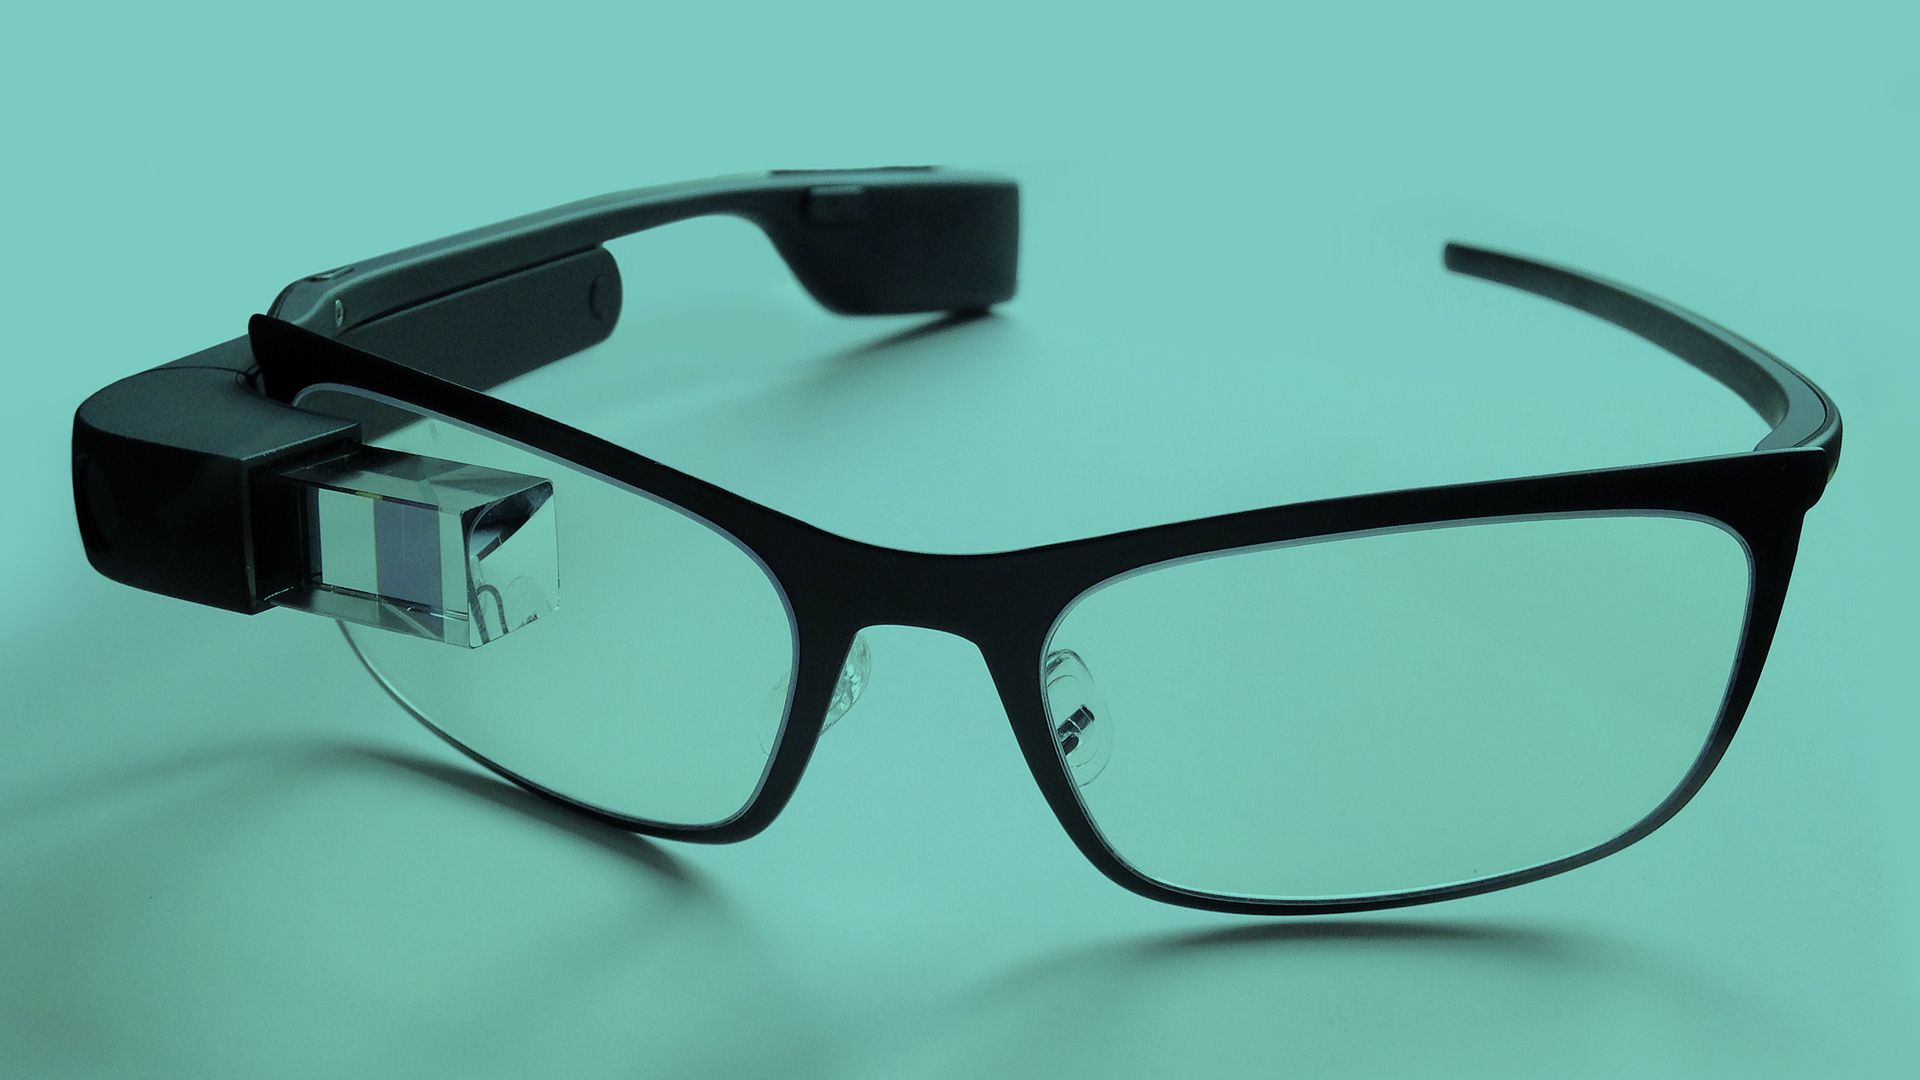 A header image: A Google Glass with frames for prescription lenses.